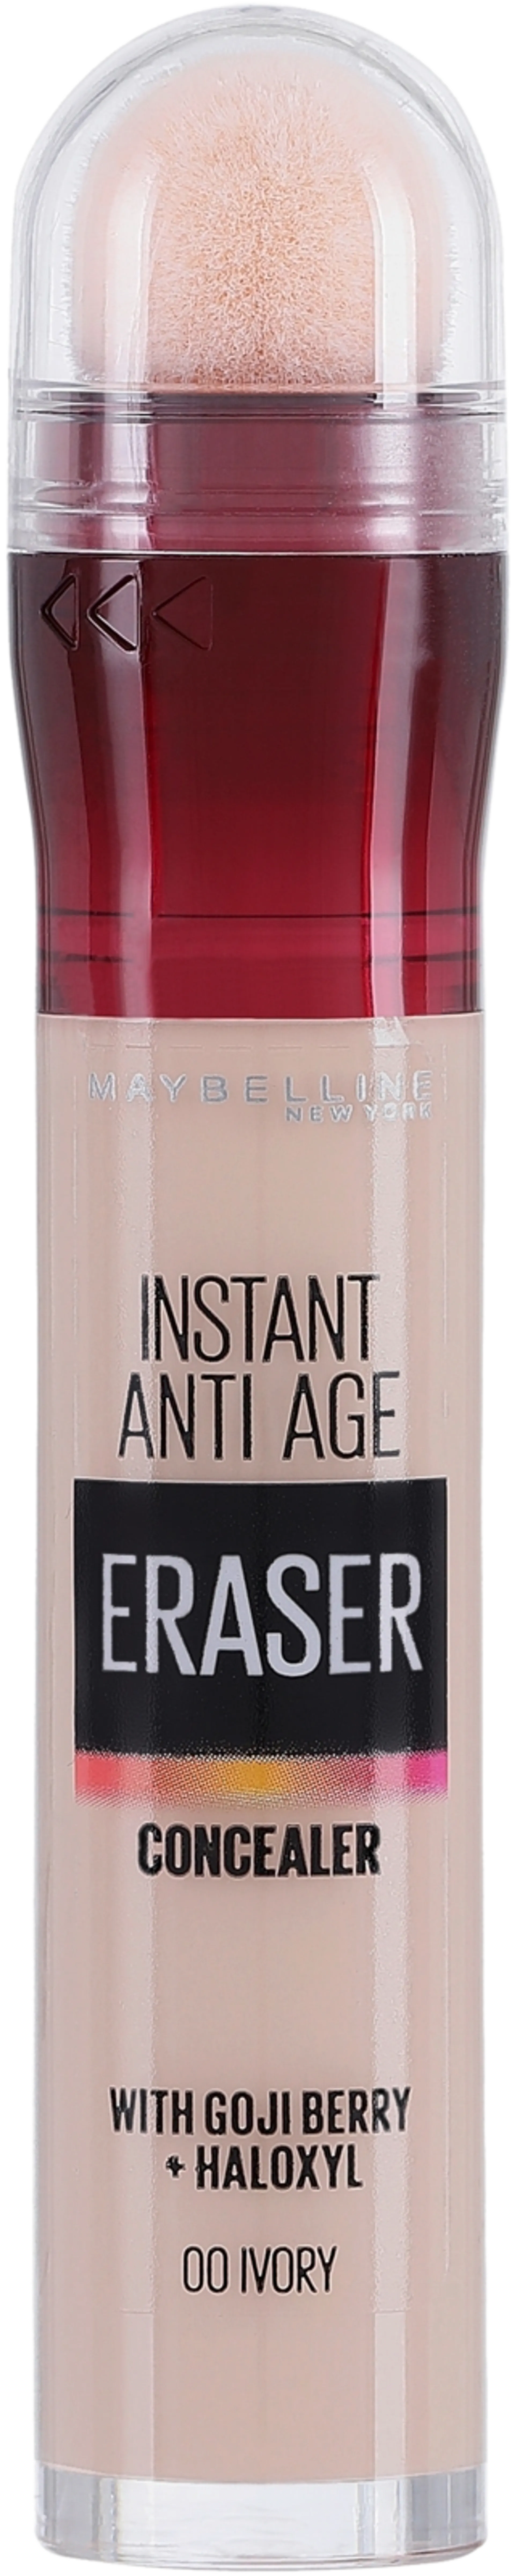 Maybelline New York Instant Anti Age Eraser 00 Ivory peitevoide 6,8ml